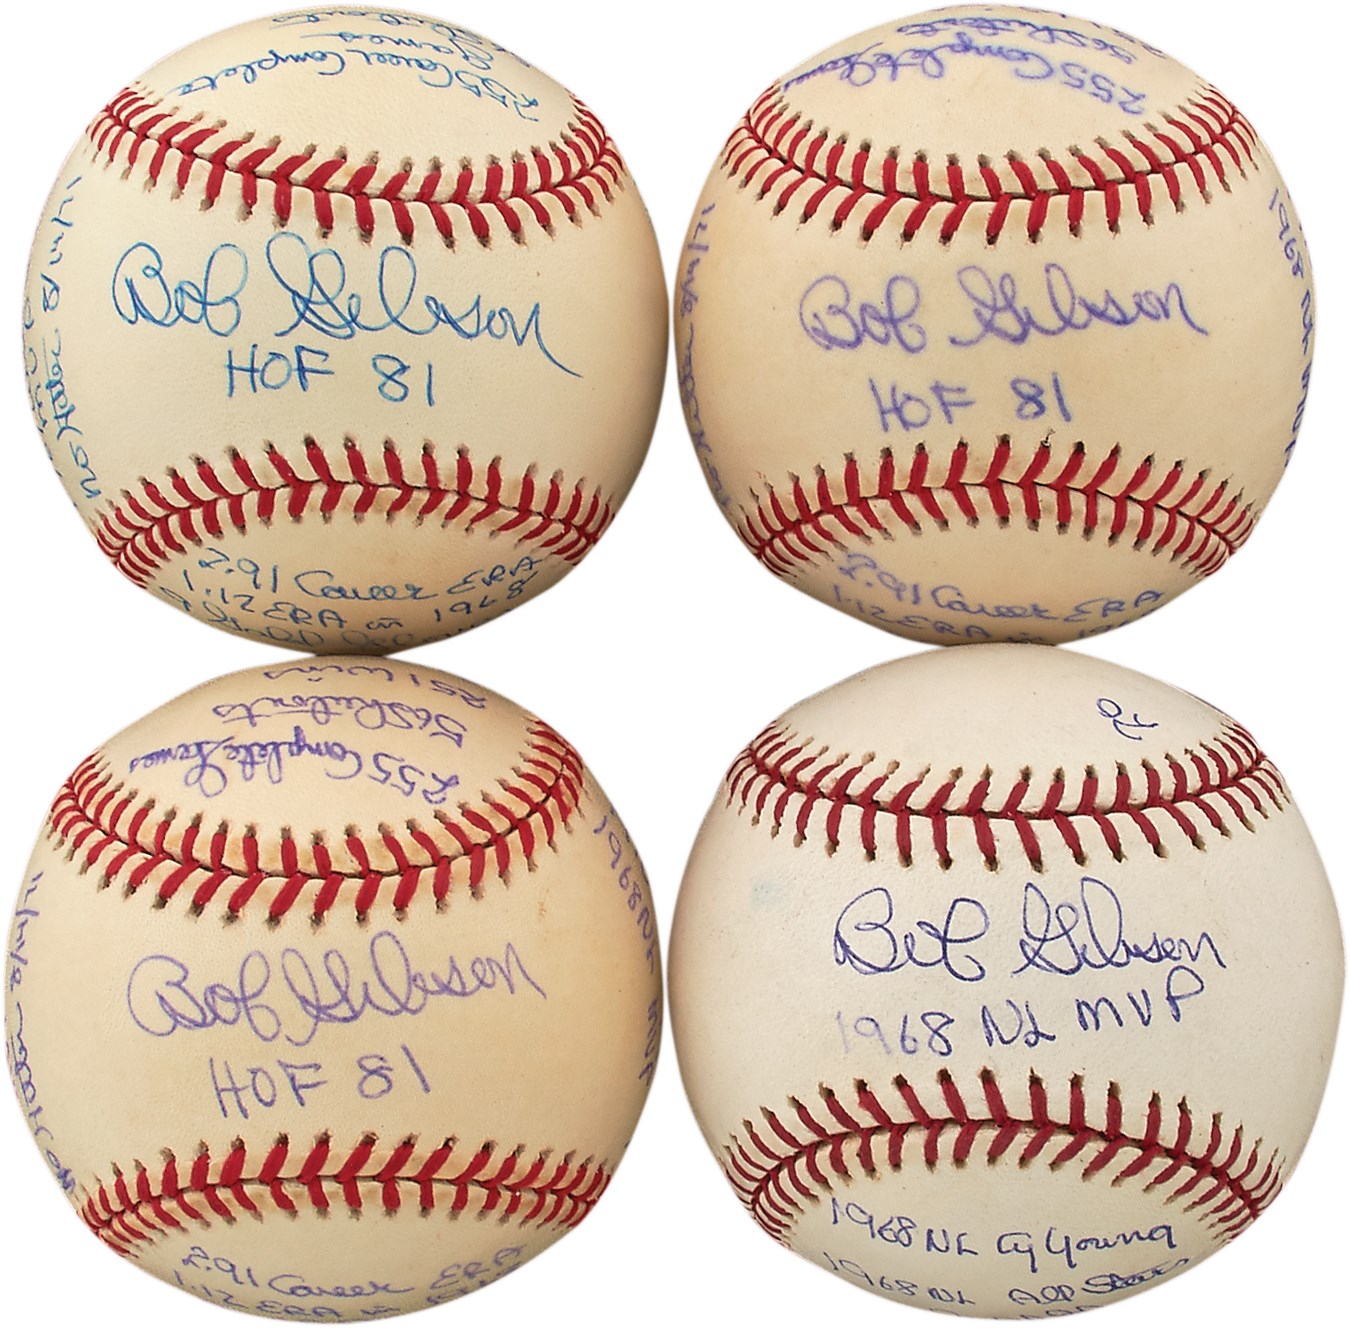 Bob Gibson Signed Stat Baseballs (4)